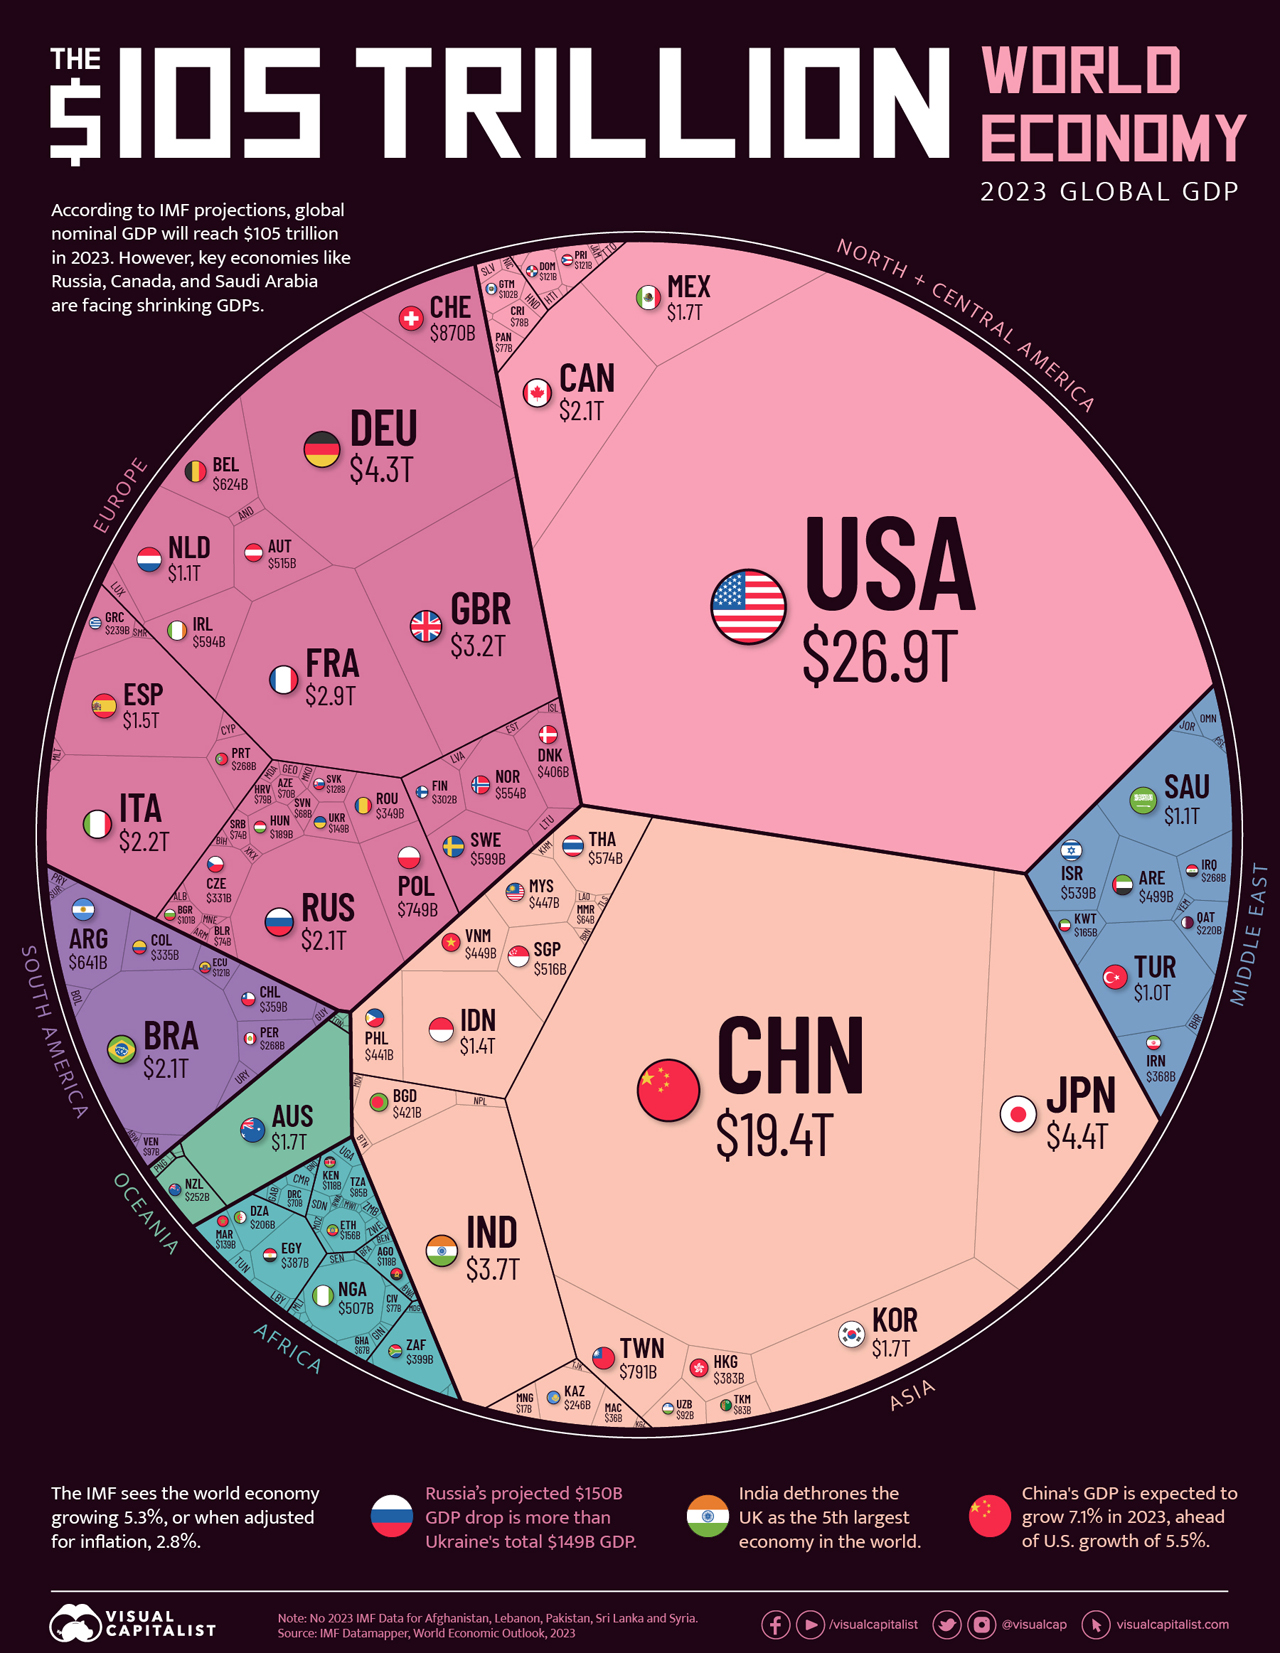 Visualizing the $105 Trillion World Economy in One Chart